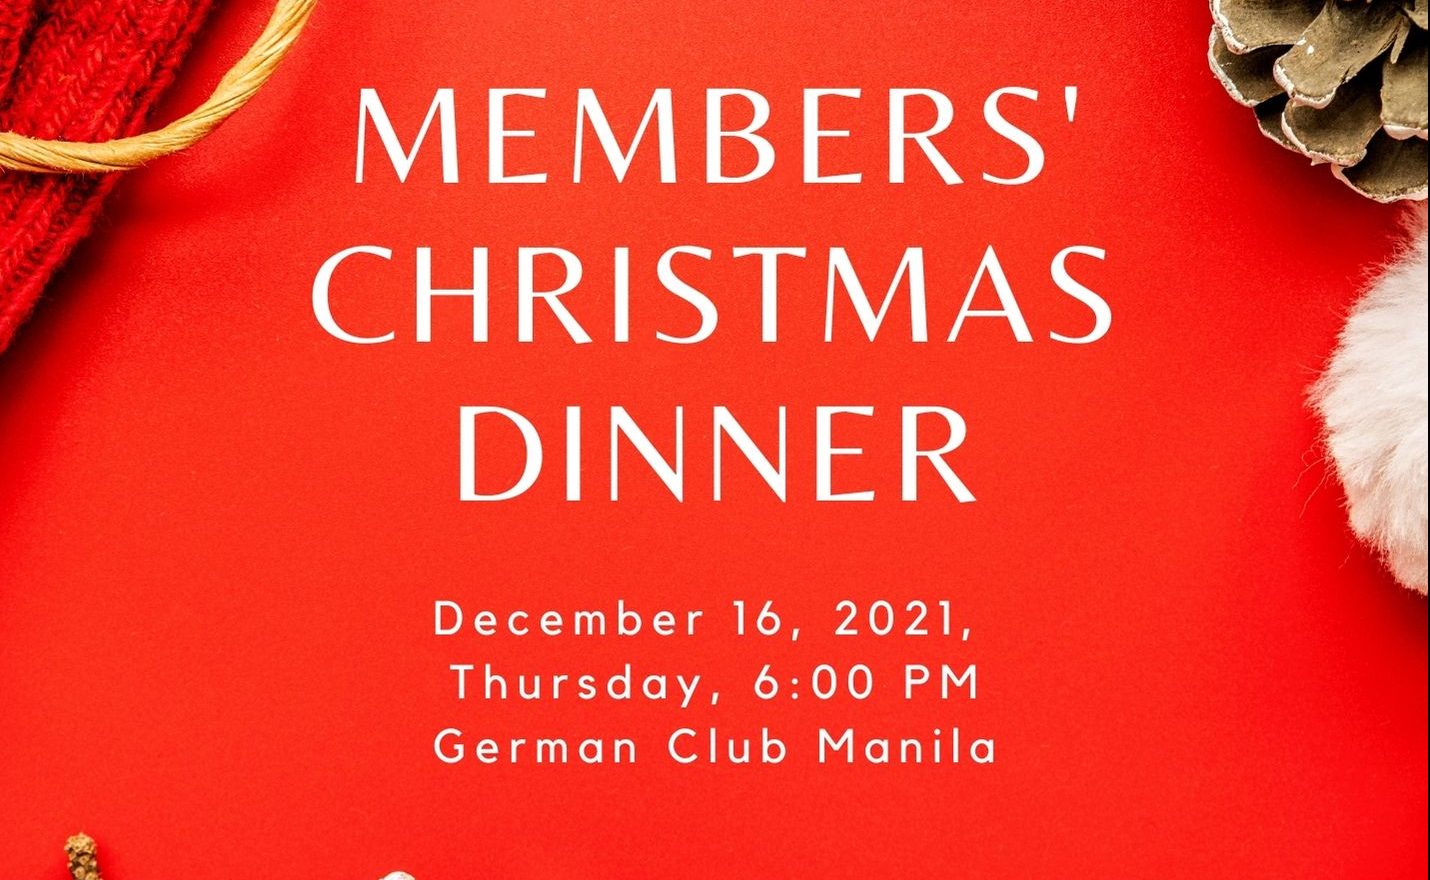 Members' Christmas Dinner